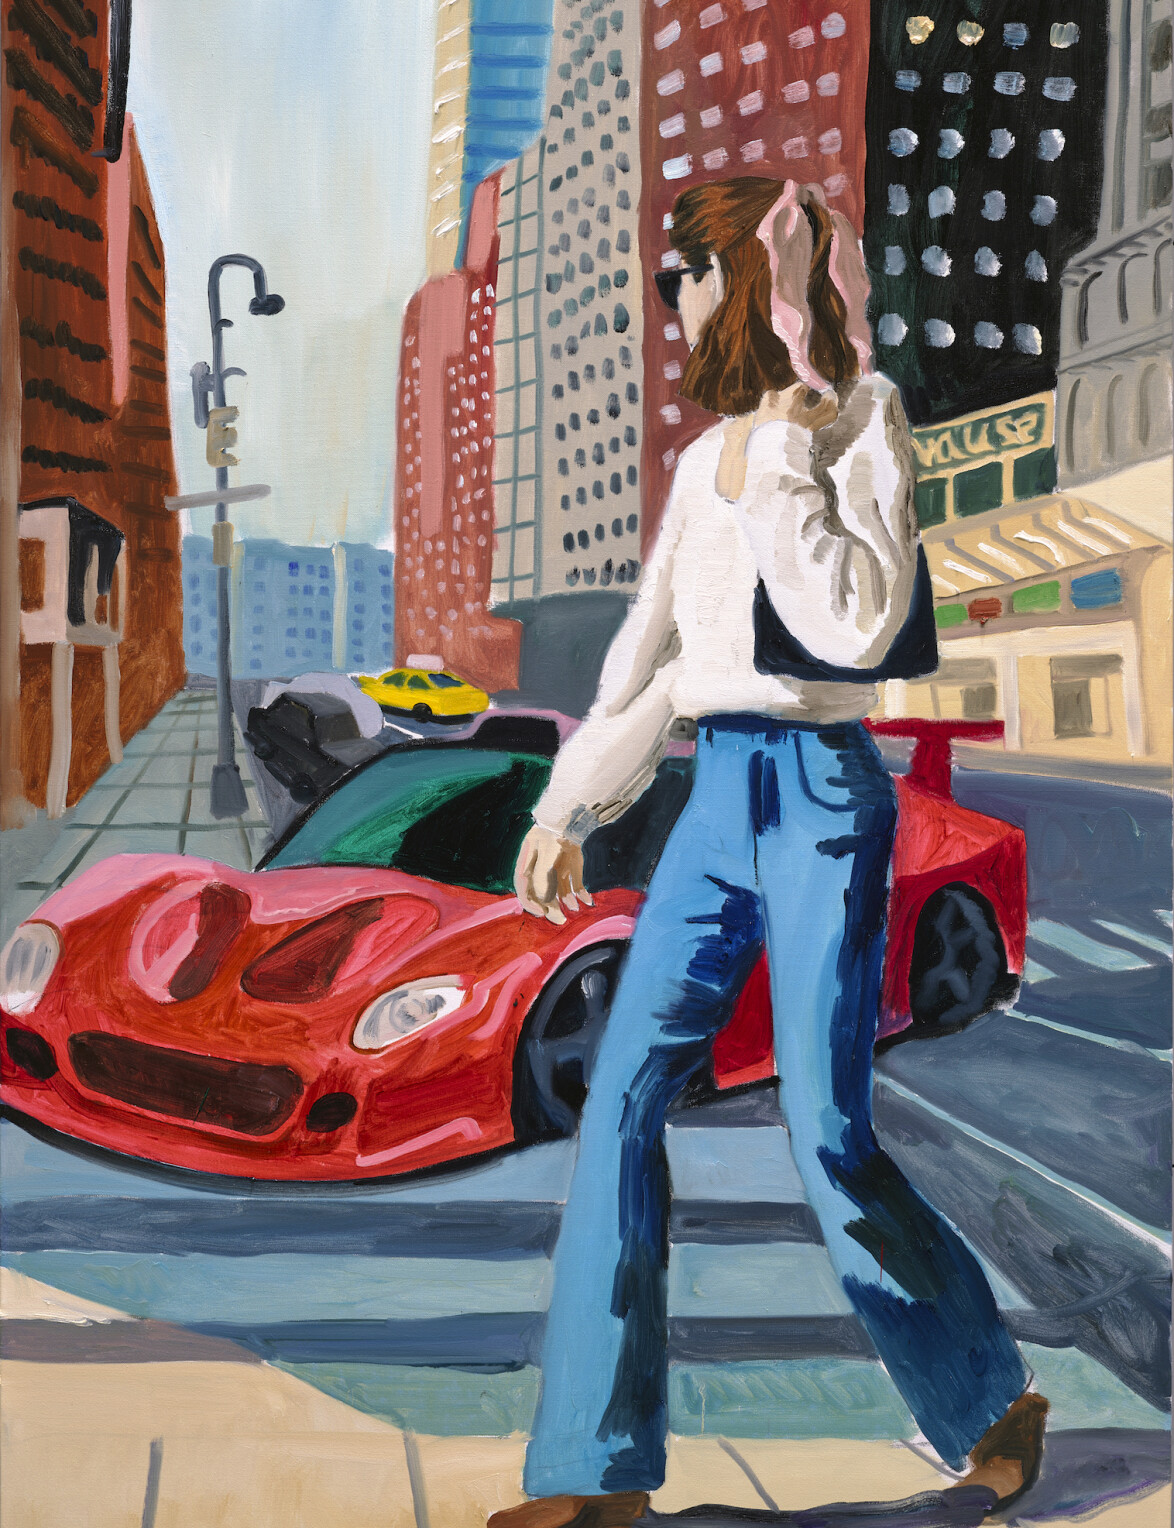 YANG Lee
Wander Series - Wandering Through Manhattan
2022
Oil on canvas
194×130cm